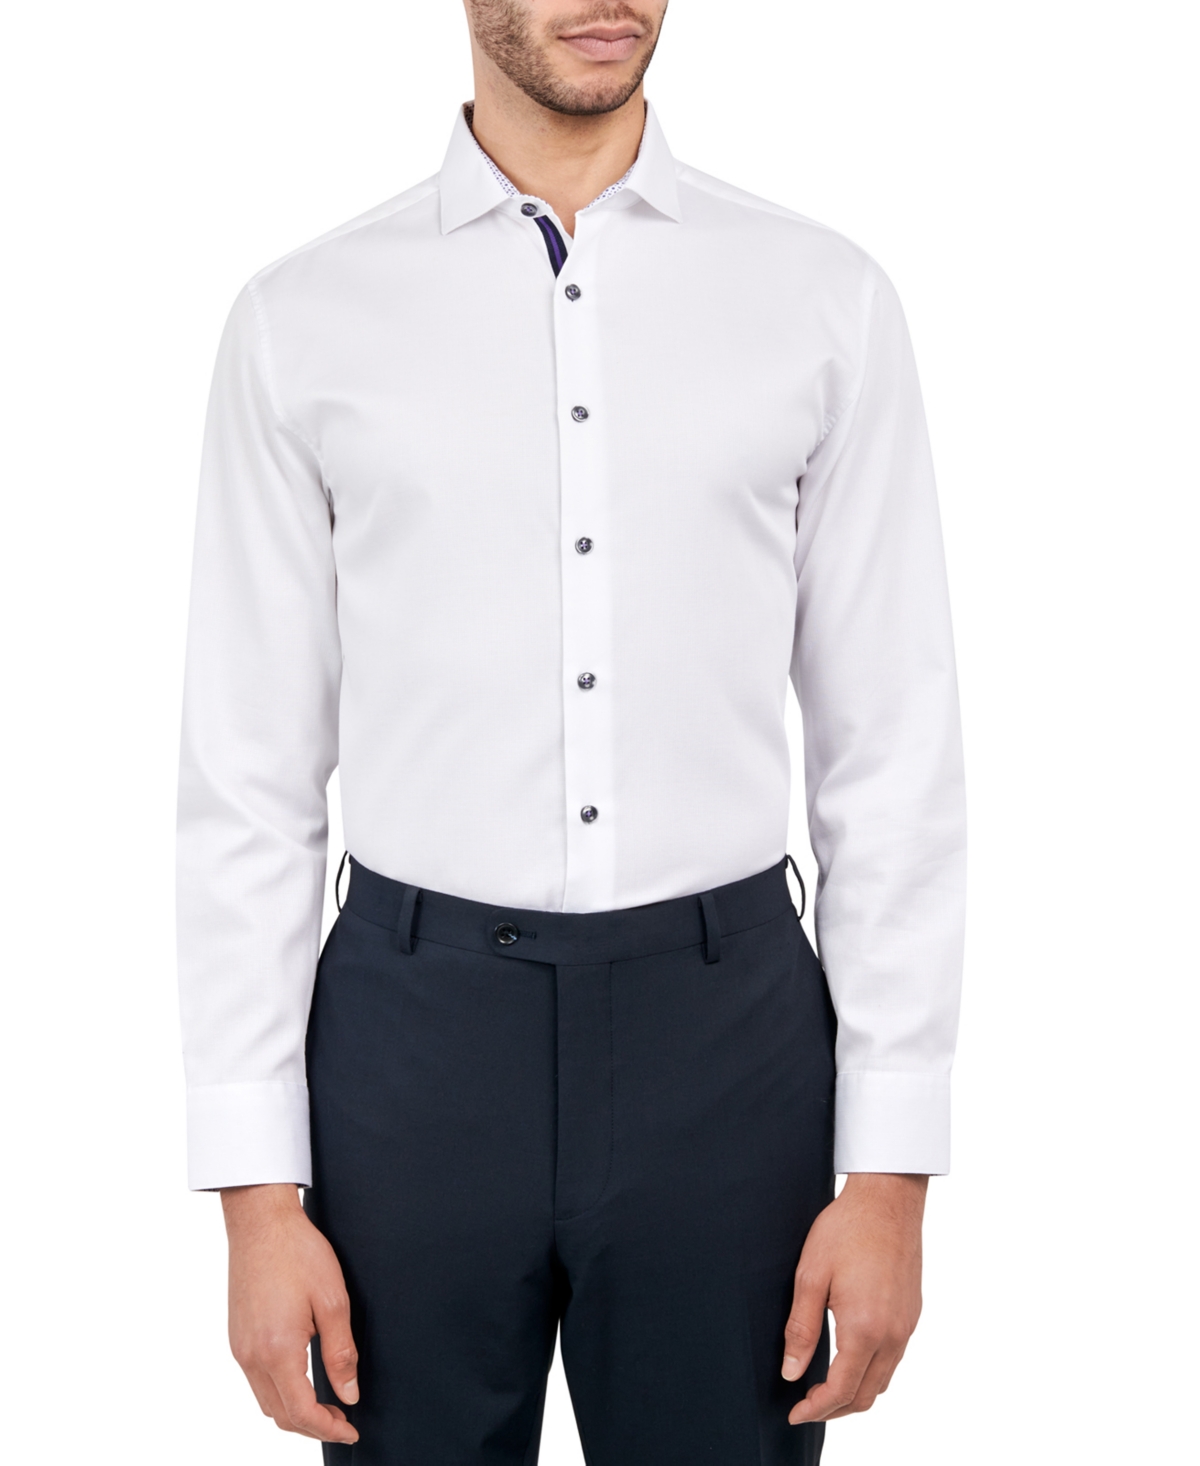 Men's Solid Texture Dress Shirt - White